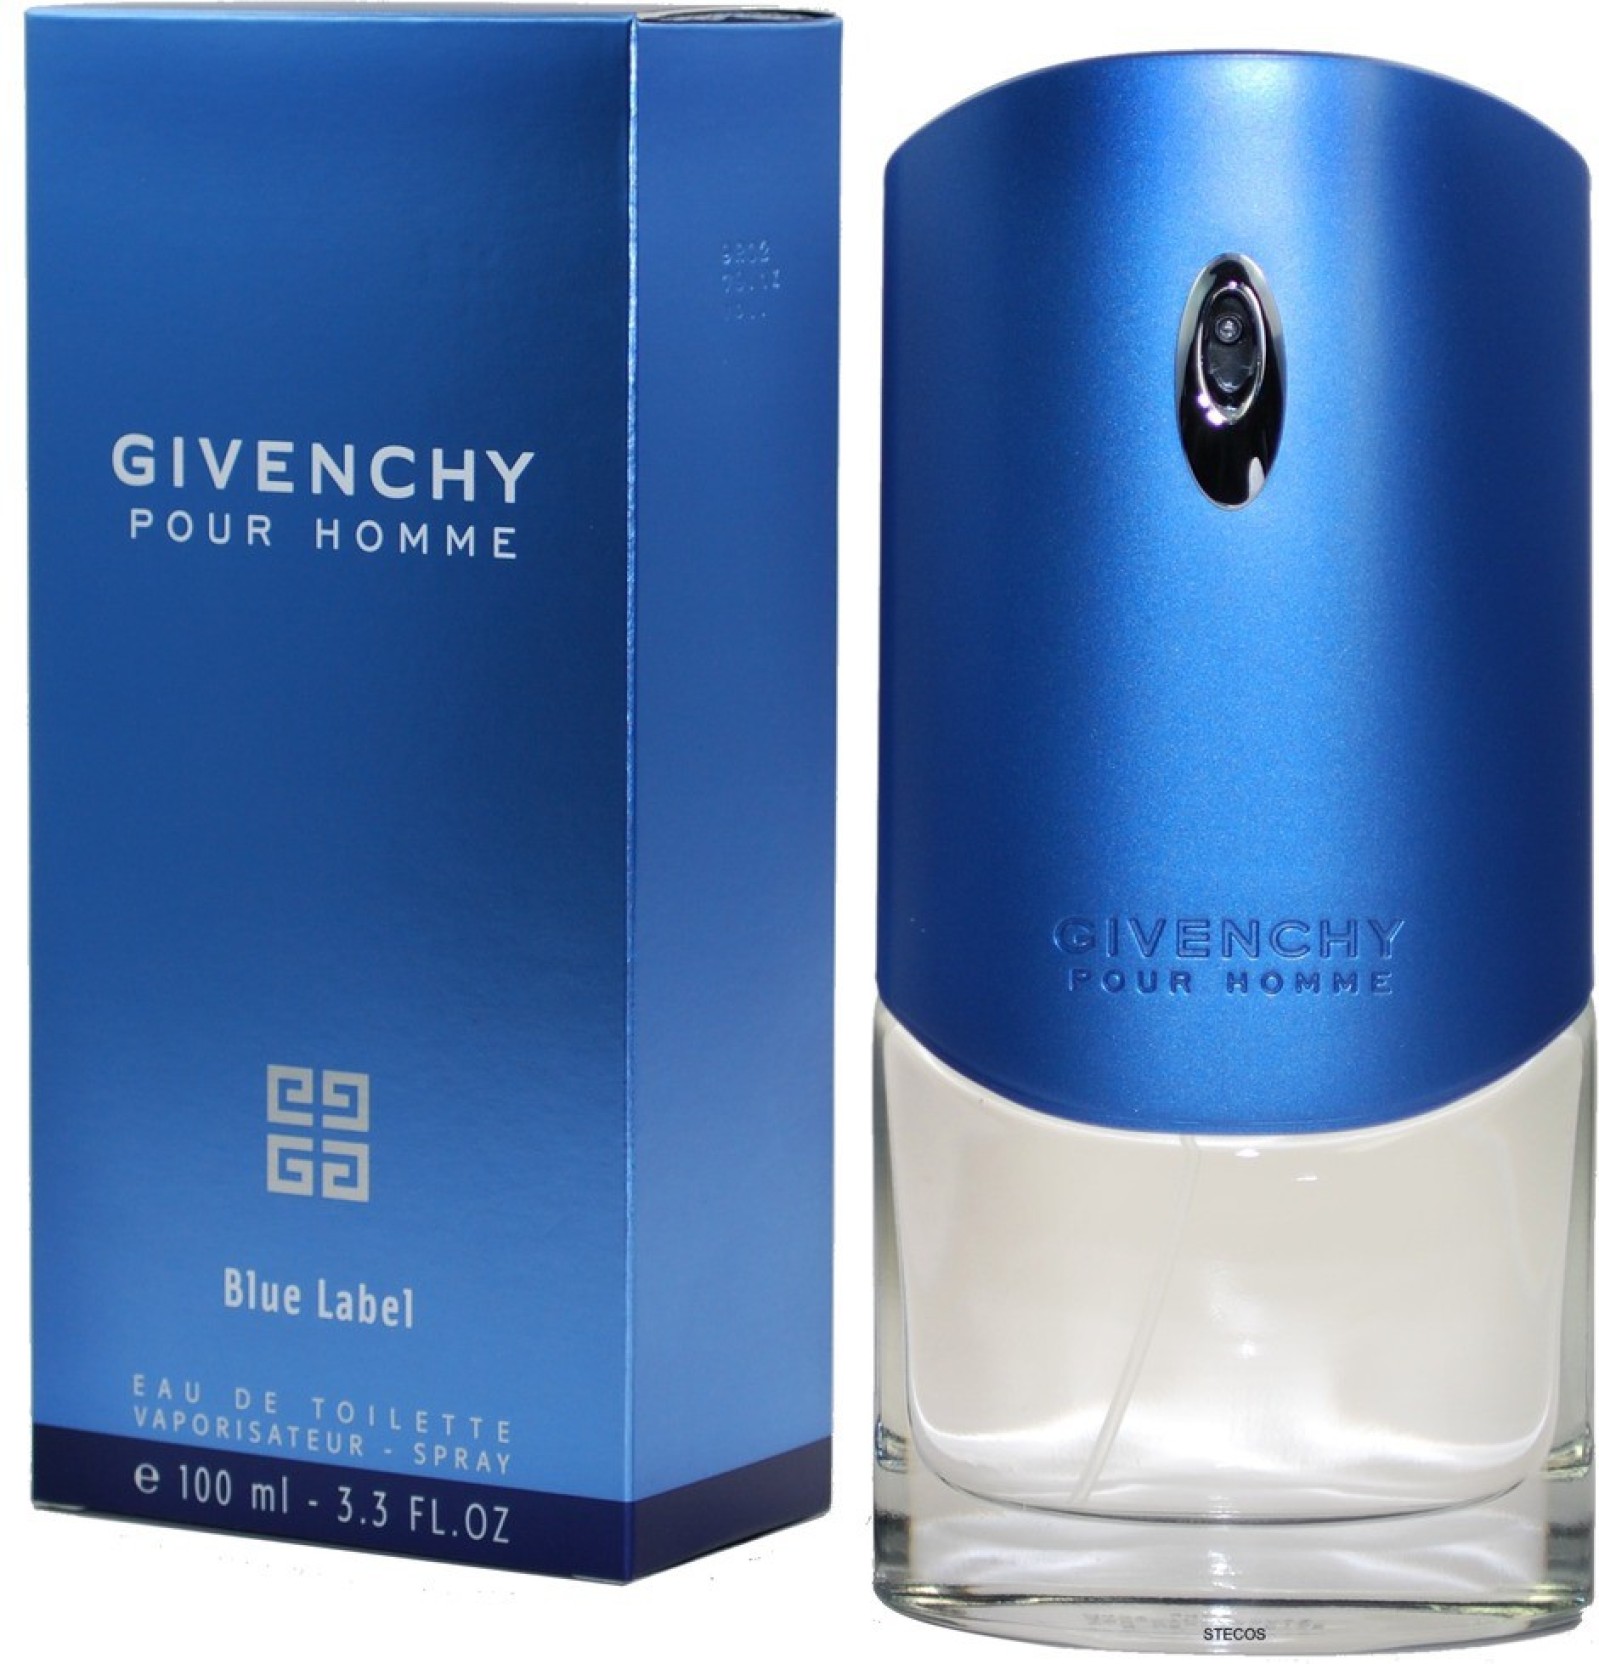 Туалетная вода хоум. Givenchy pour homme Blue Label. Givenchy Blue Label 100ml. Givenchy pour homme Blue Label Givenchy. Givenchy pour homme Blue Label EDT, 100 ml.